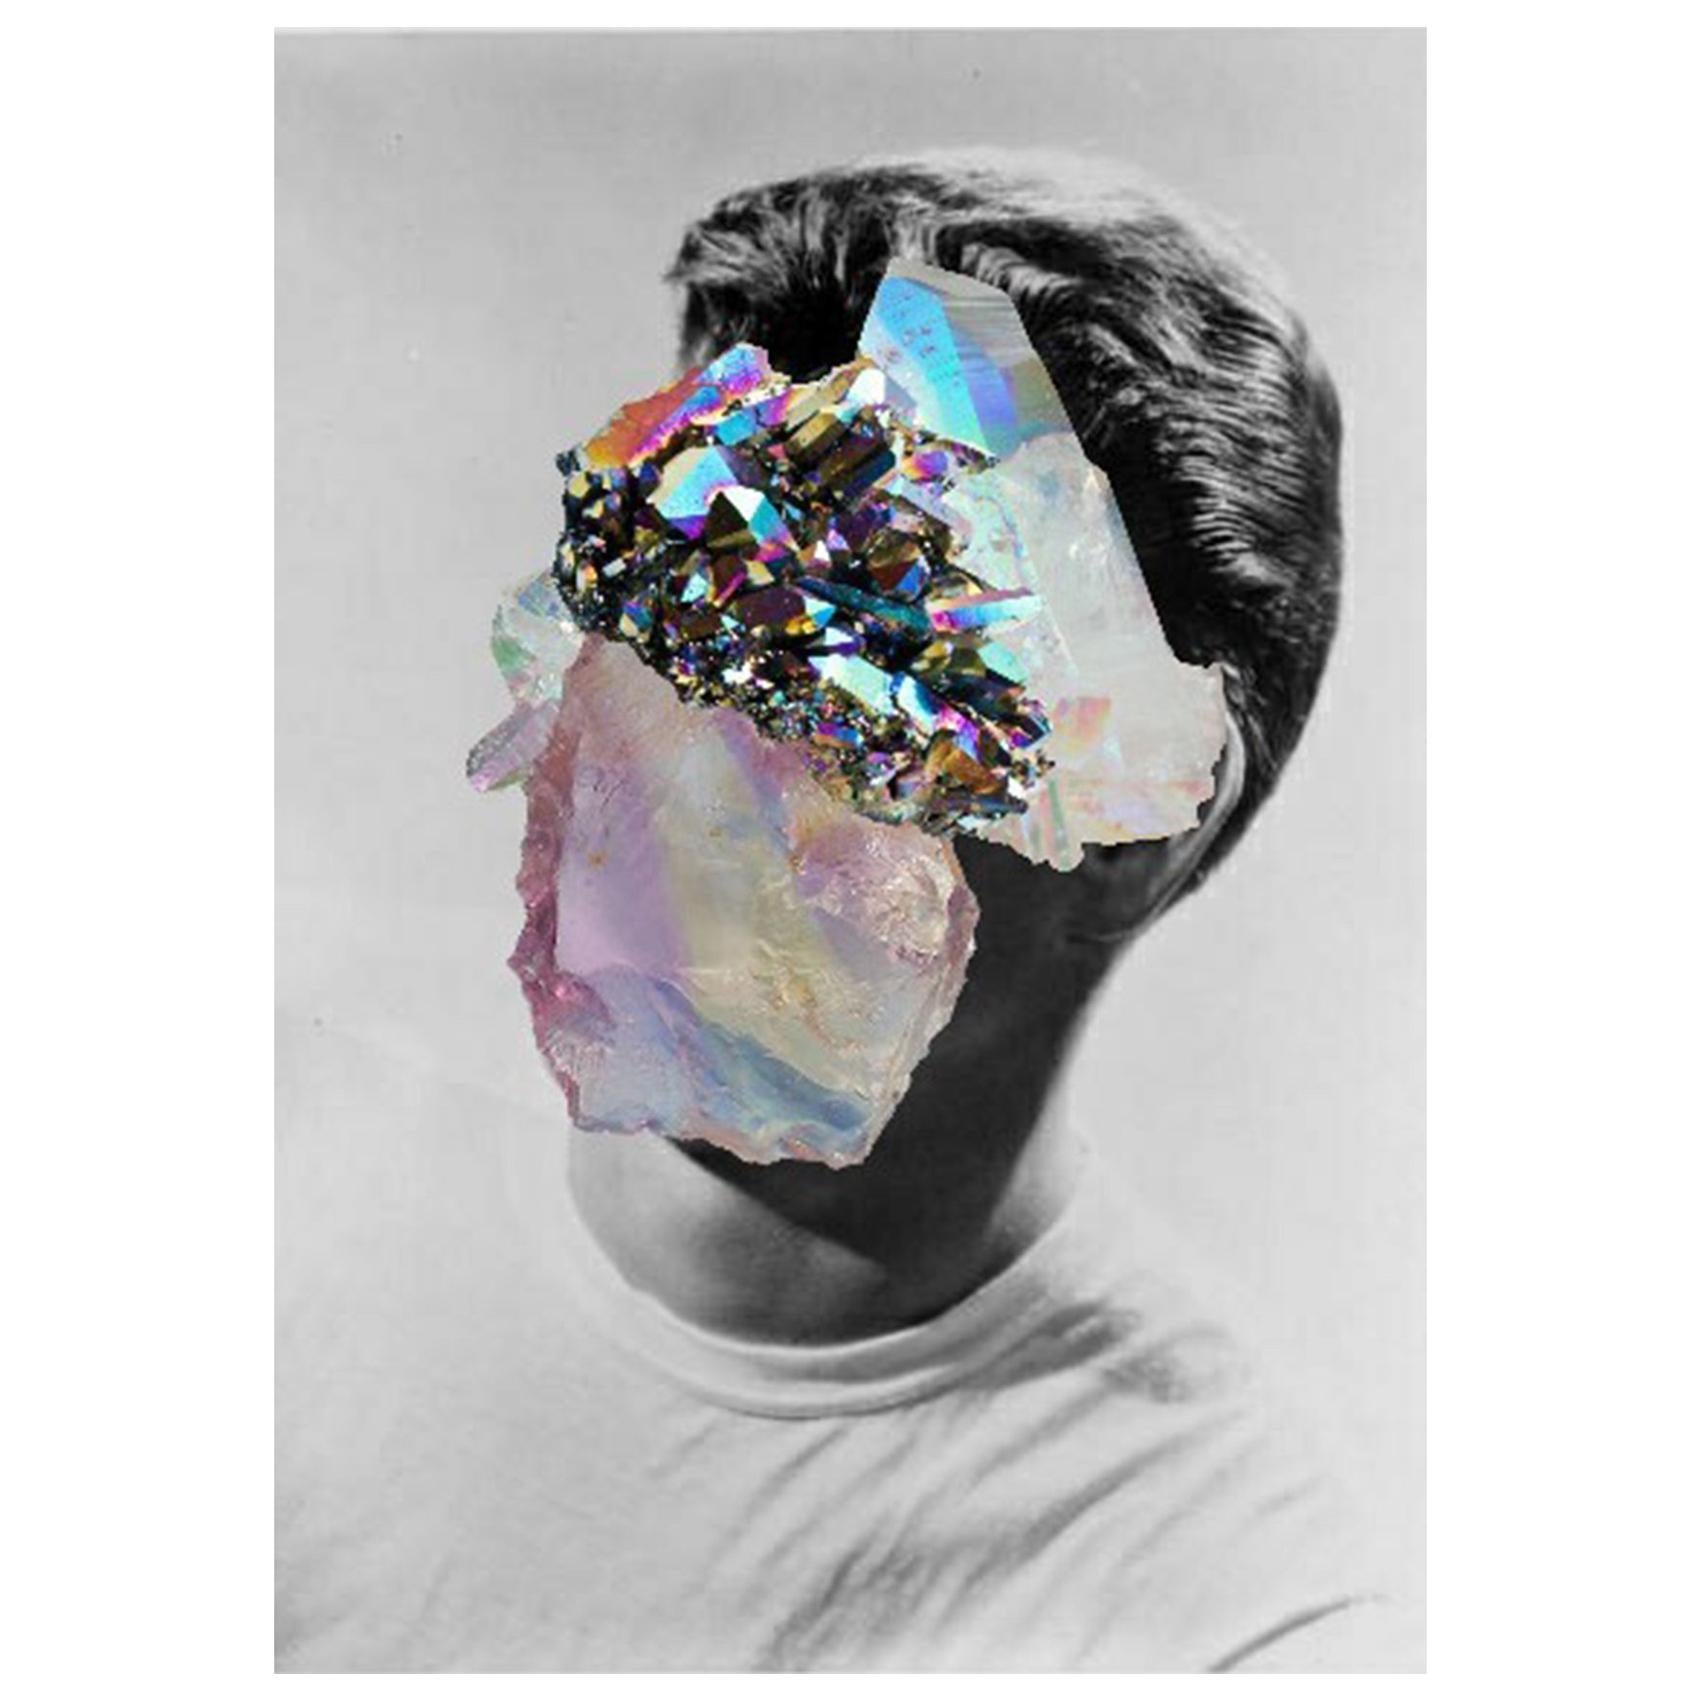 Crystal Man Portrait Naropinosa. "Untitled" Digital Collage, Spain, 2019